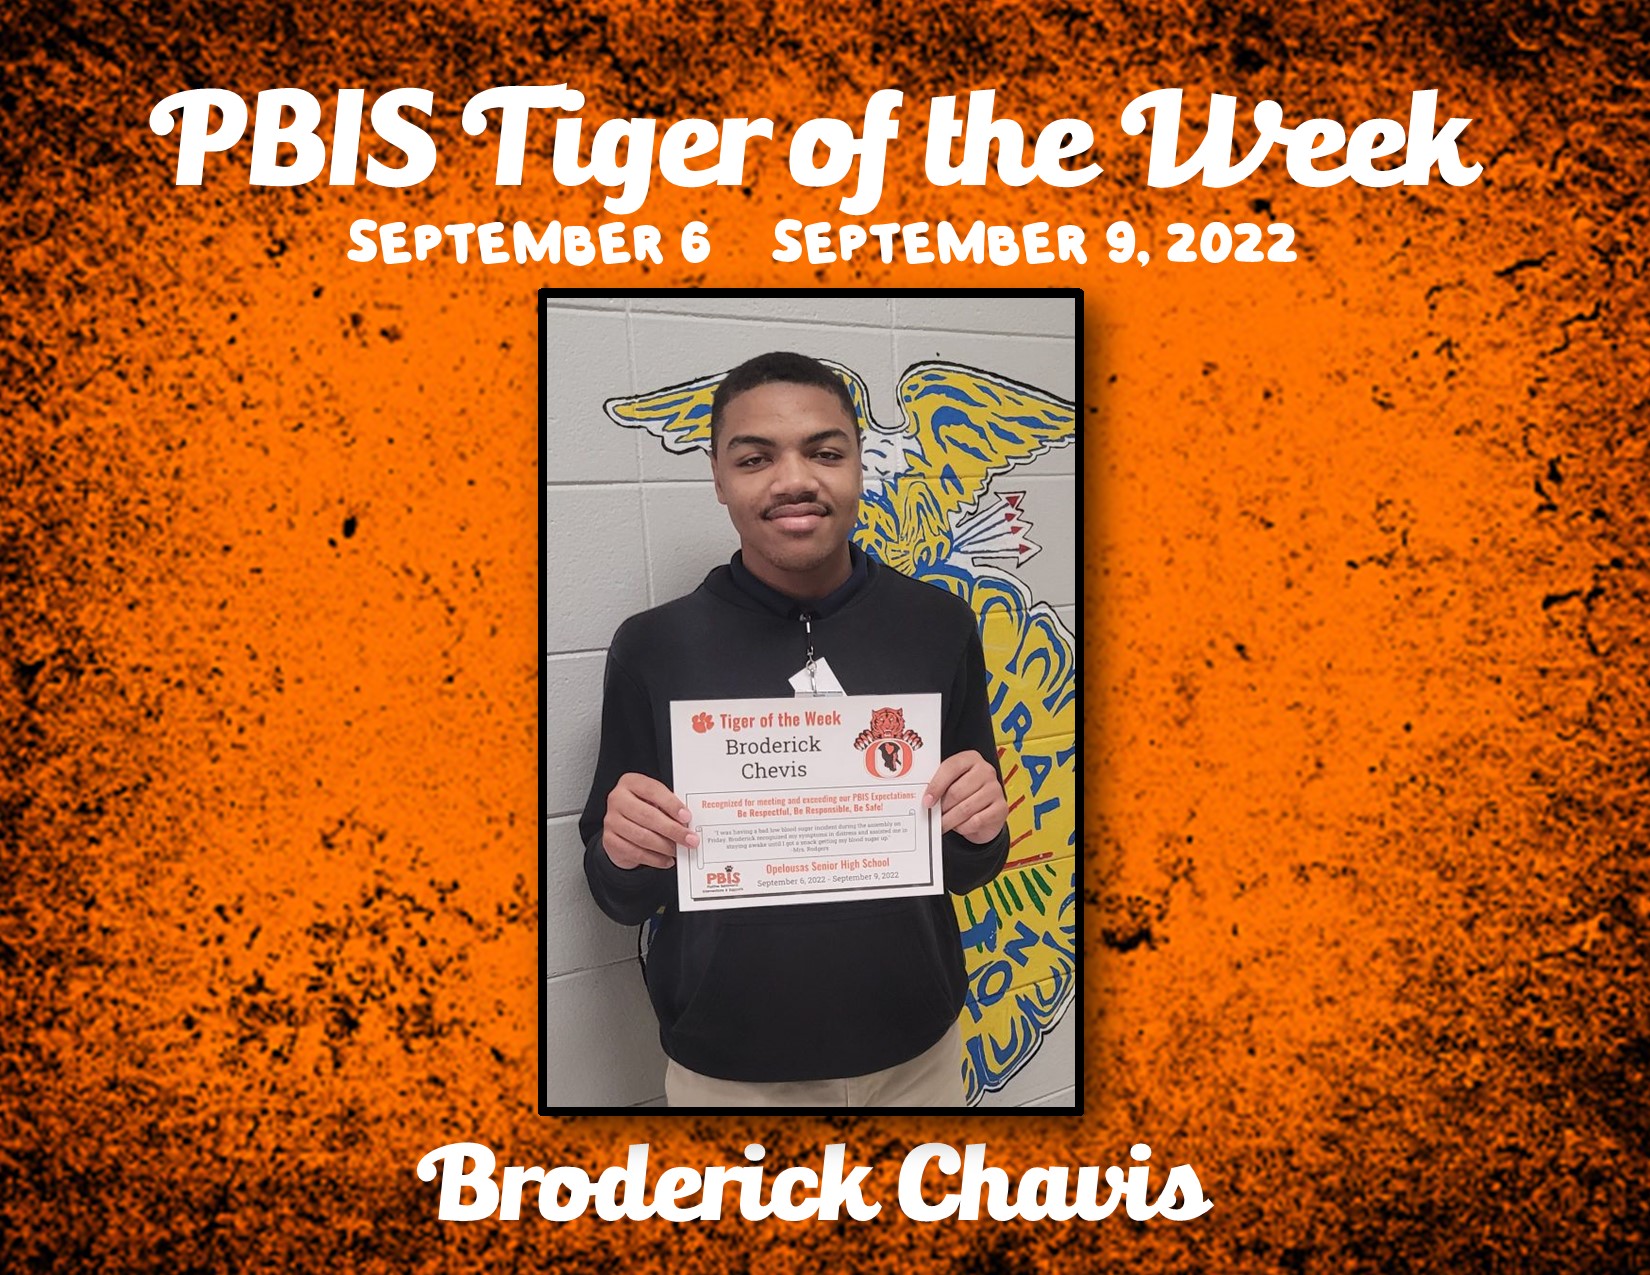 PBIS Tiger of the Week Broderick Chavis